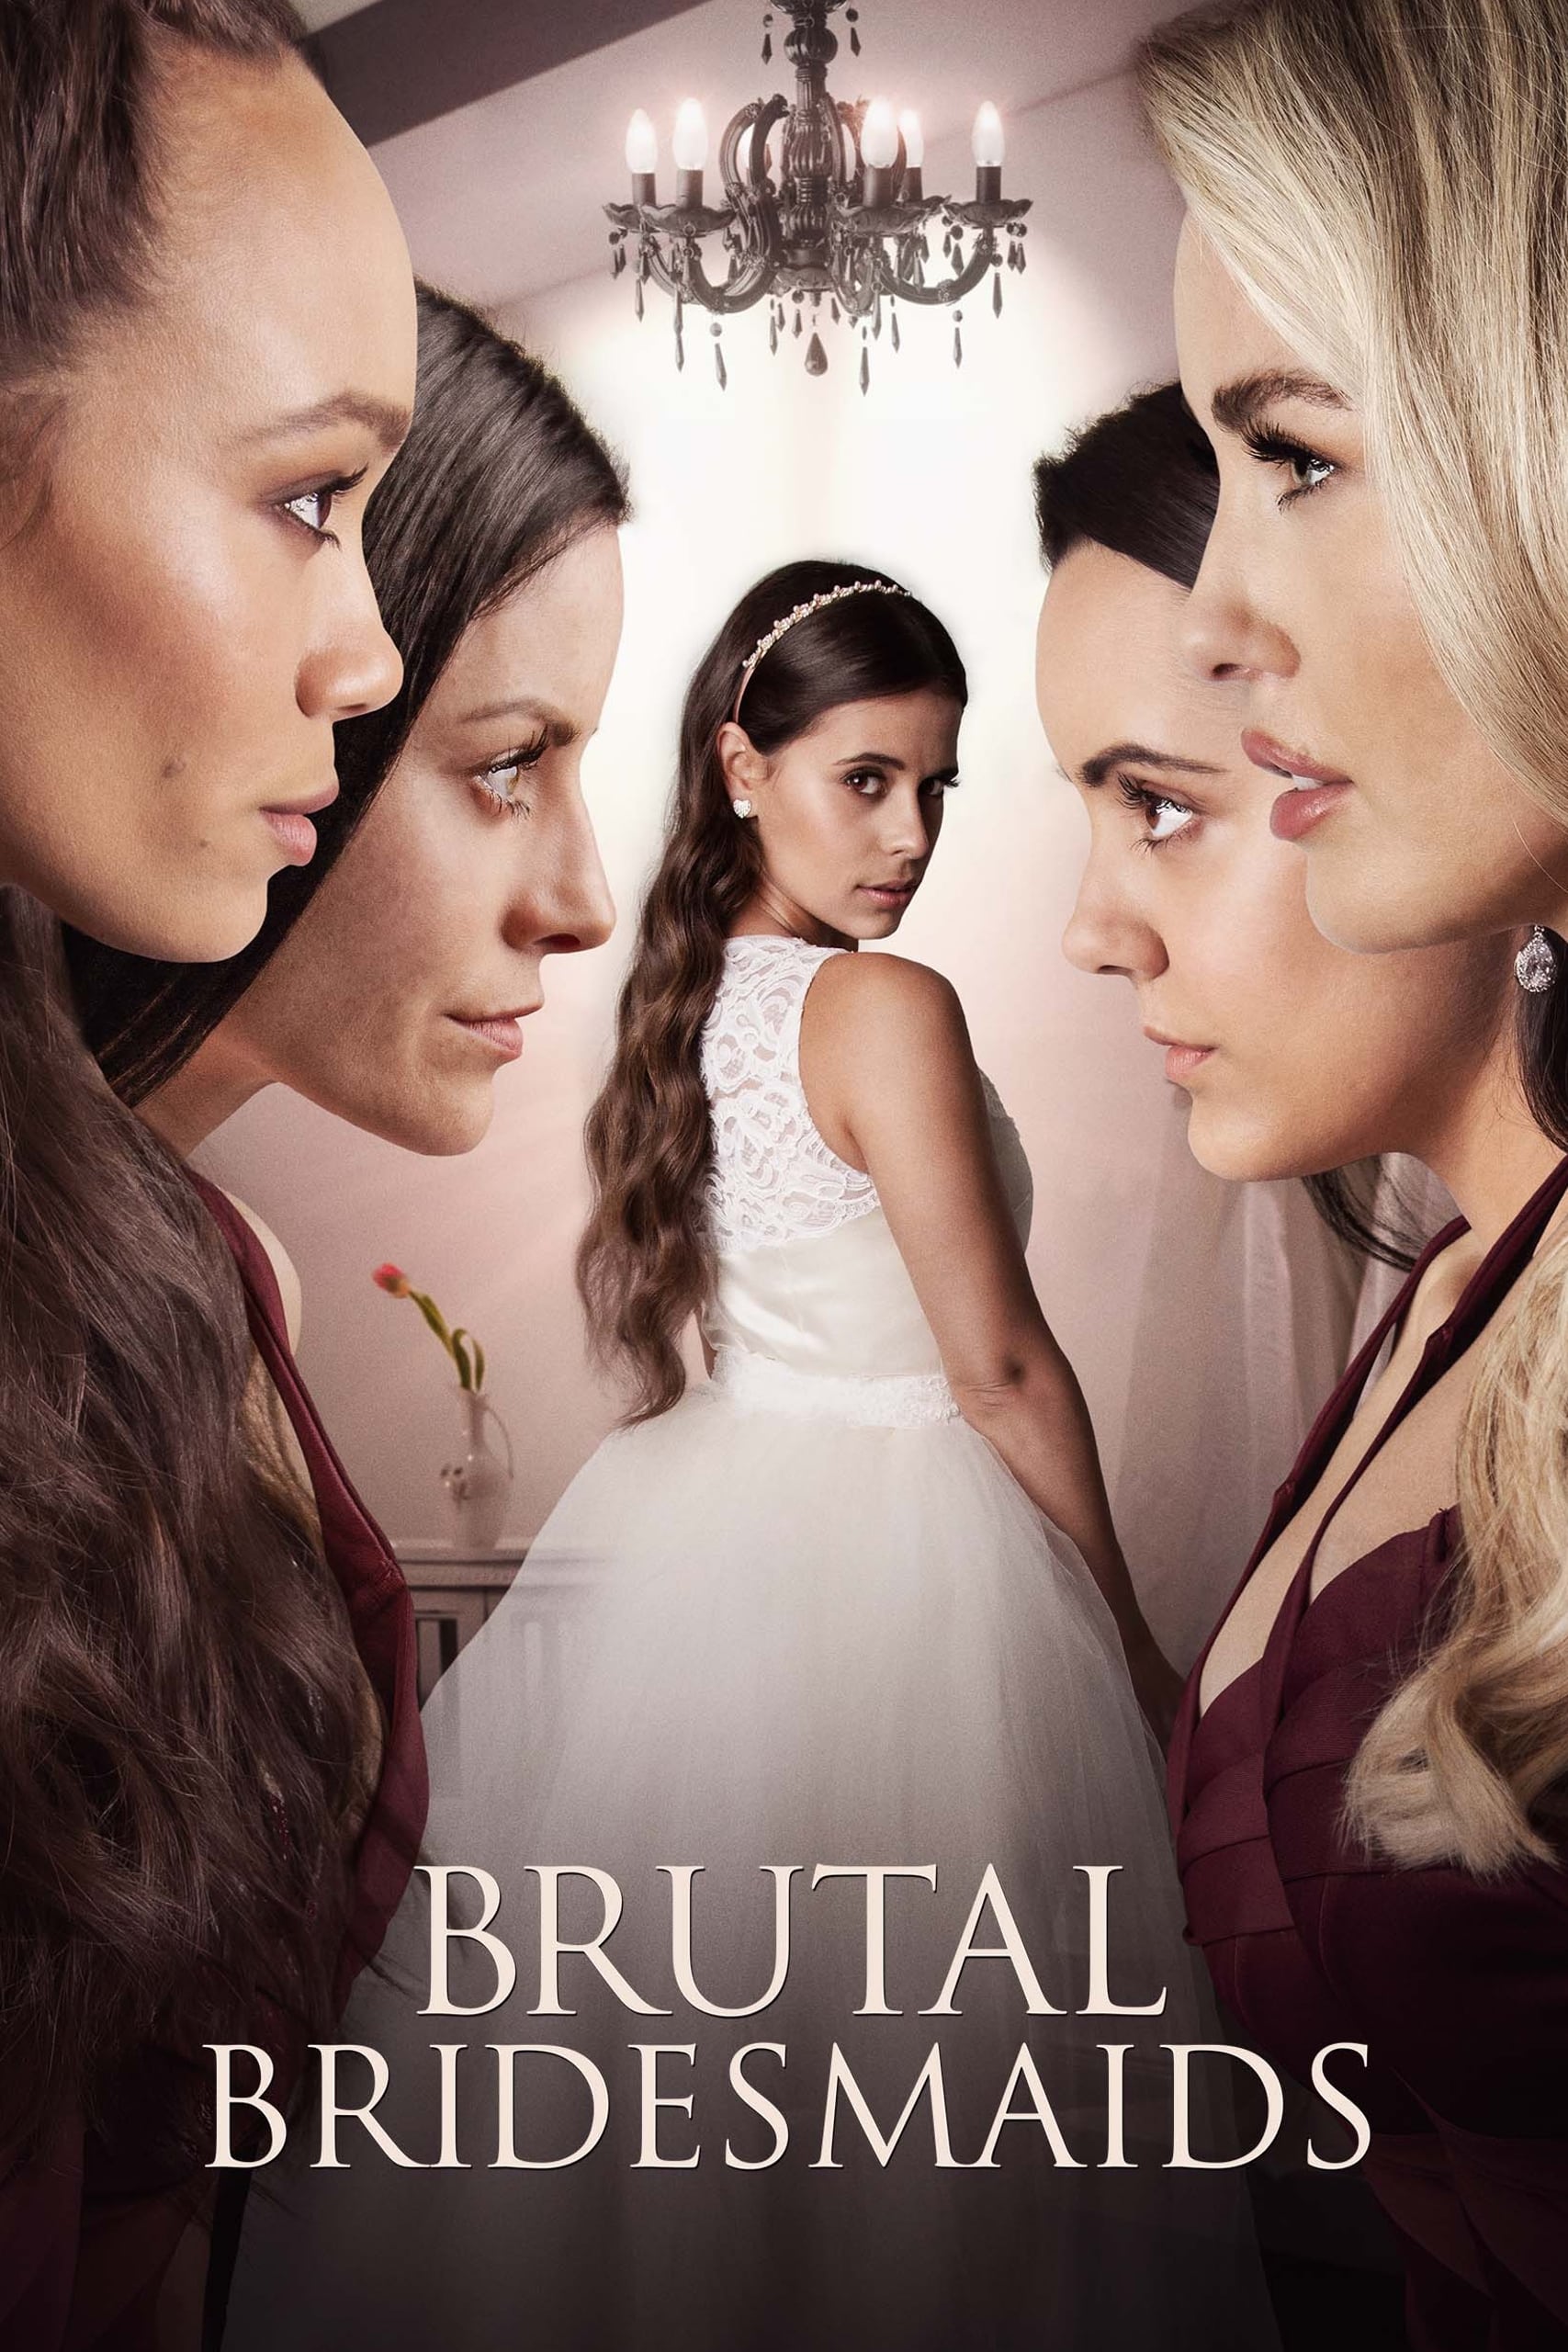 Brutal Bridesmaids